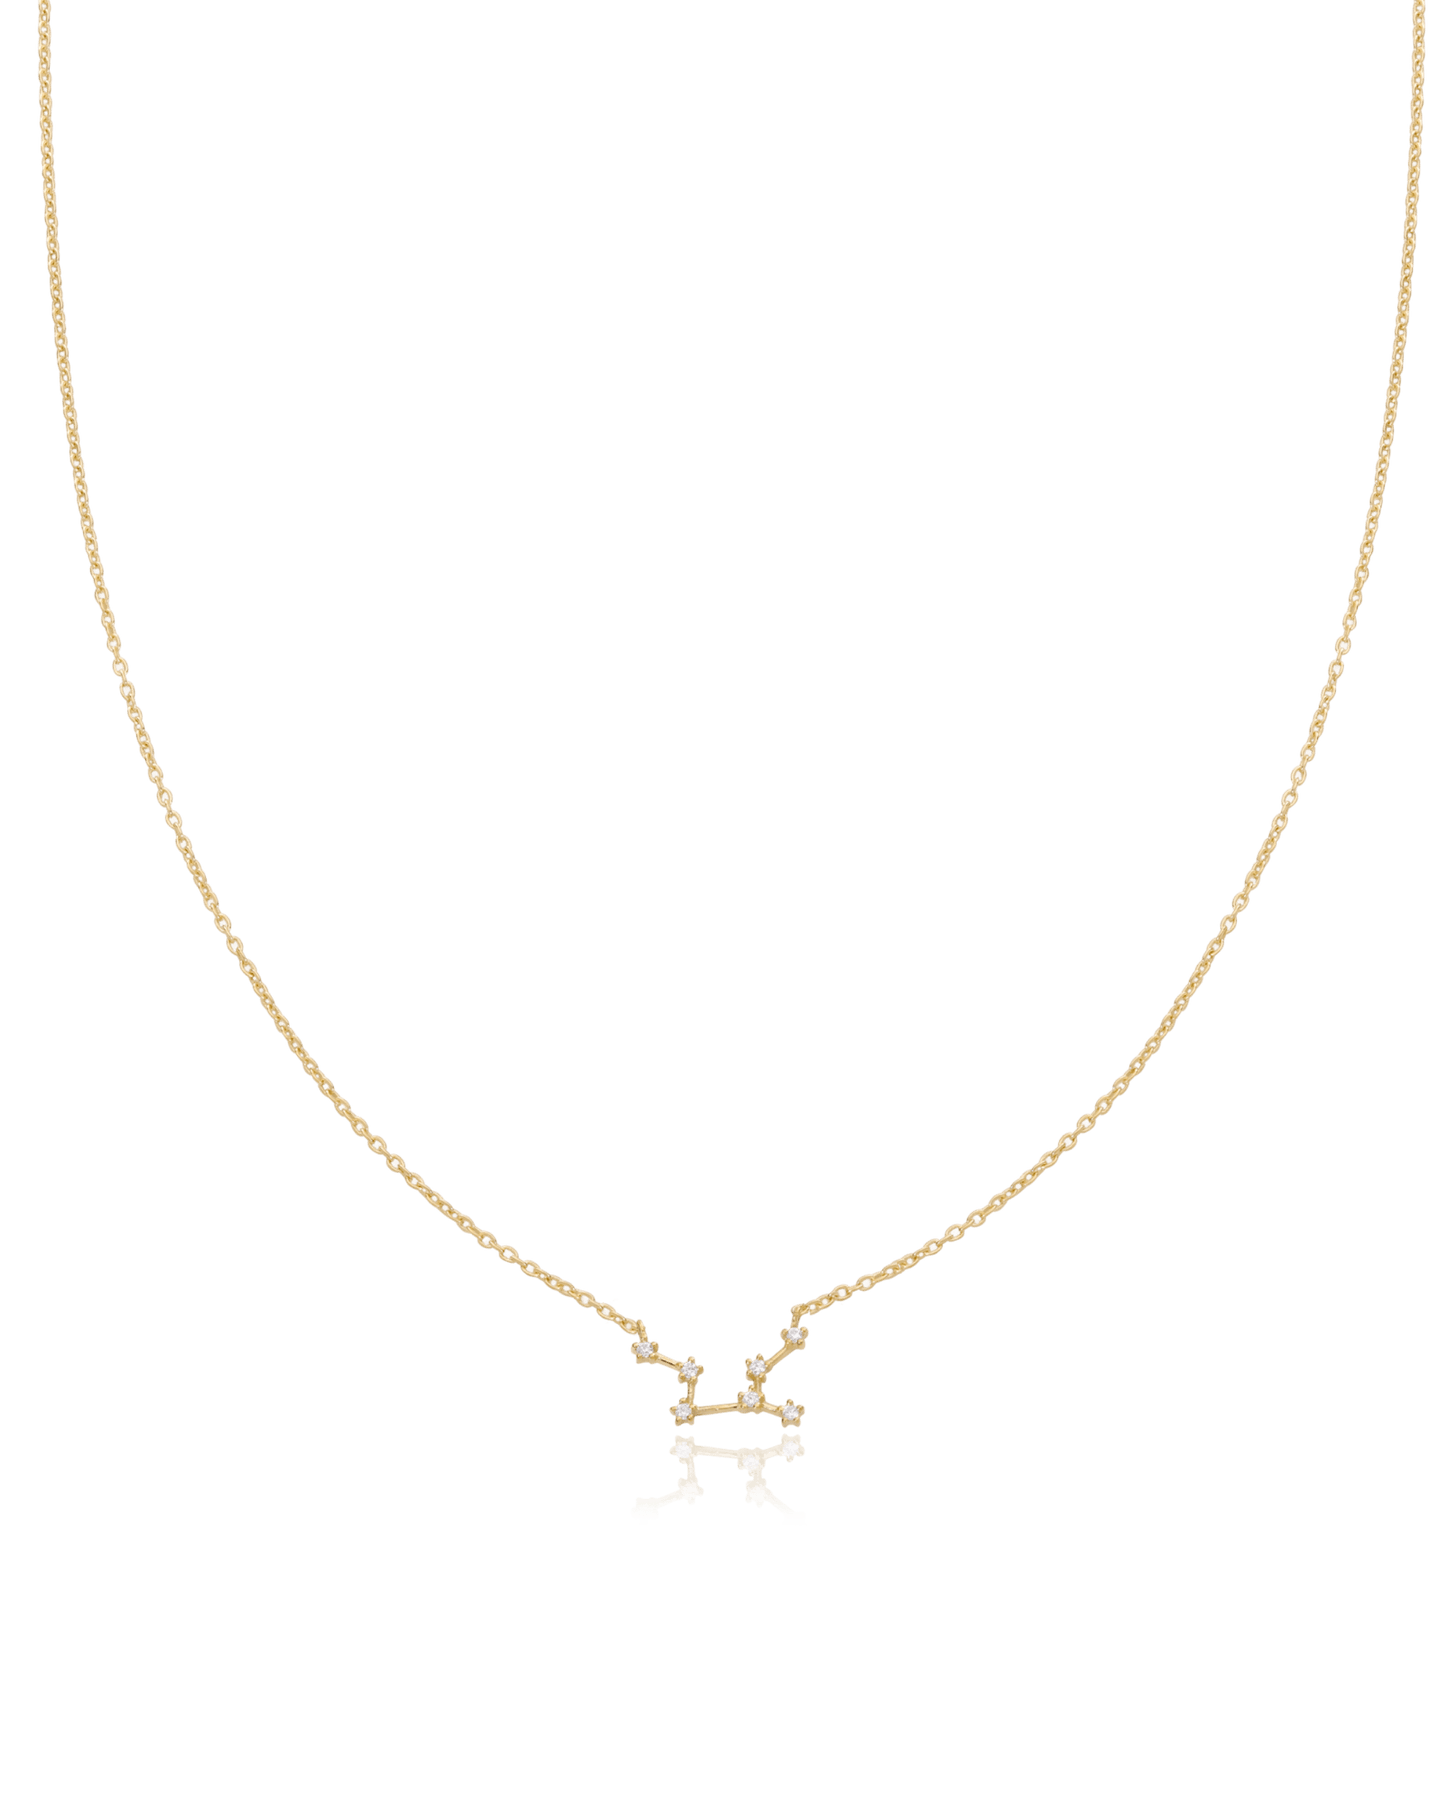 Virgo Constellation Necklace - 18K Gold Vermeil Necklaces magal-dev 16" 